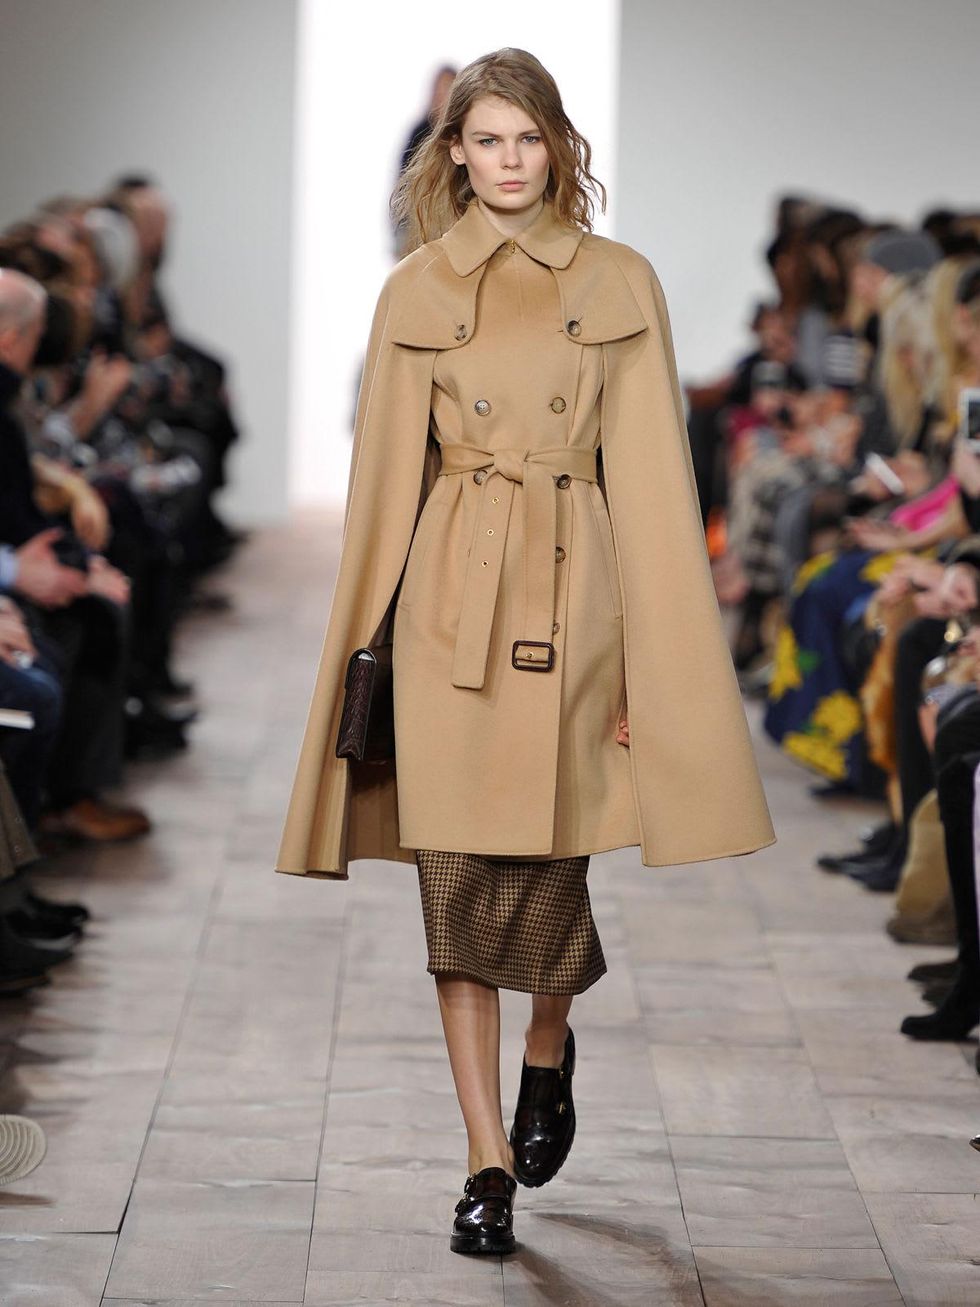 Clifford Pugh Fashion Week New York fall 2015 February 2015 Michael Kors Look 22